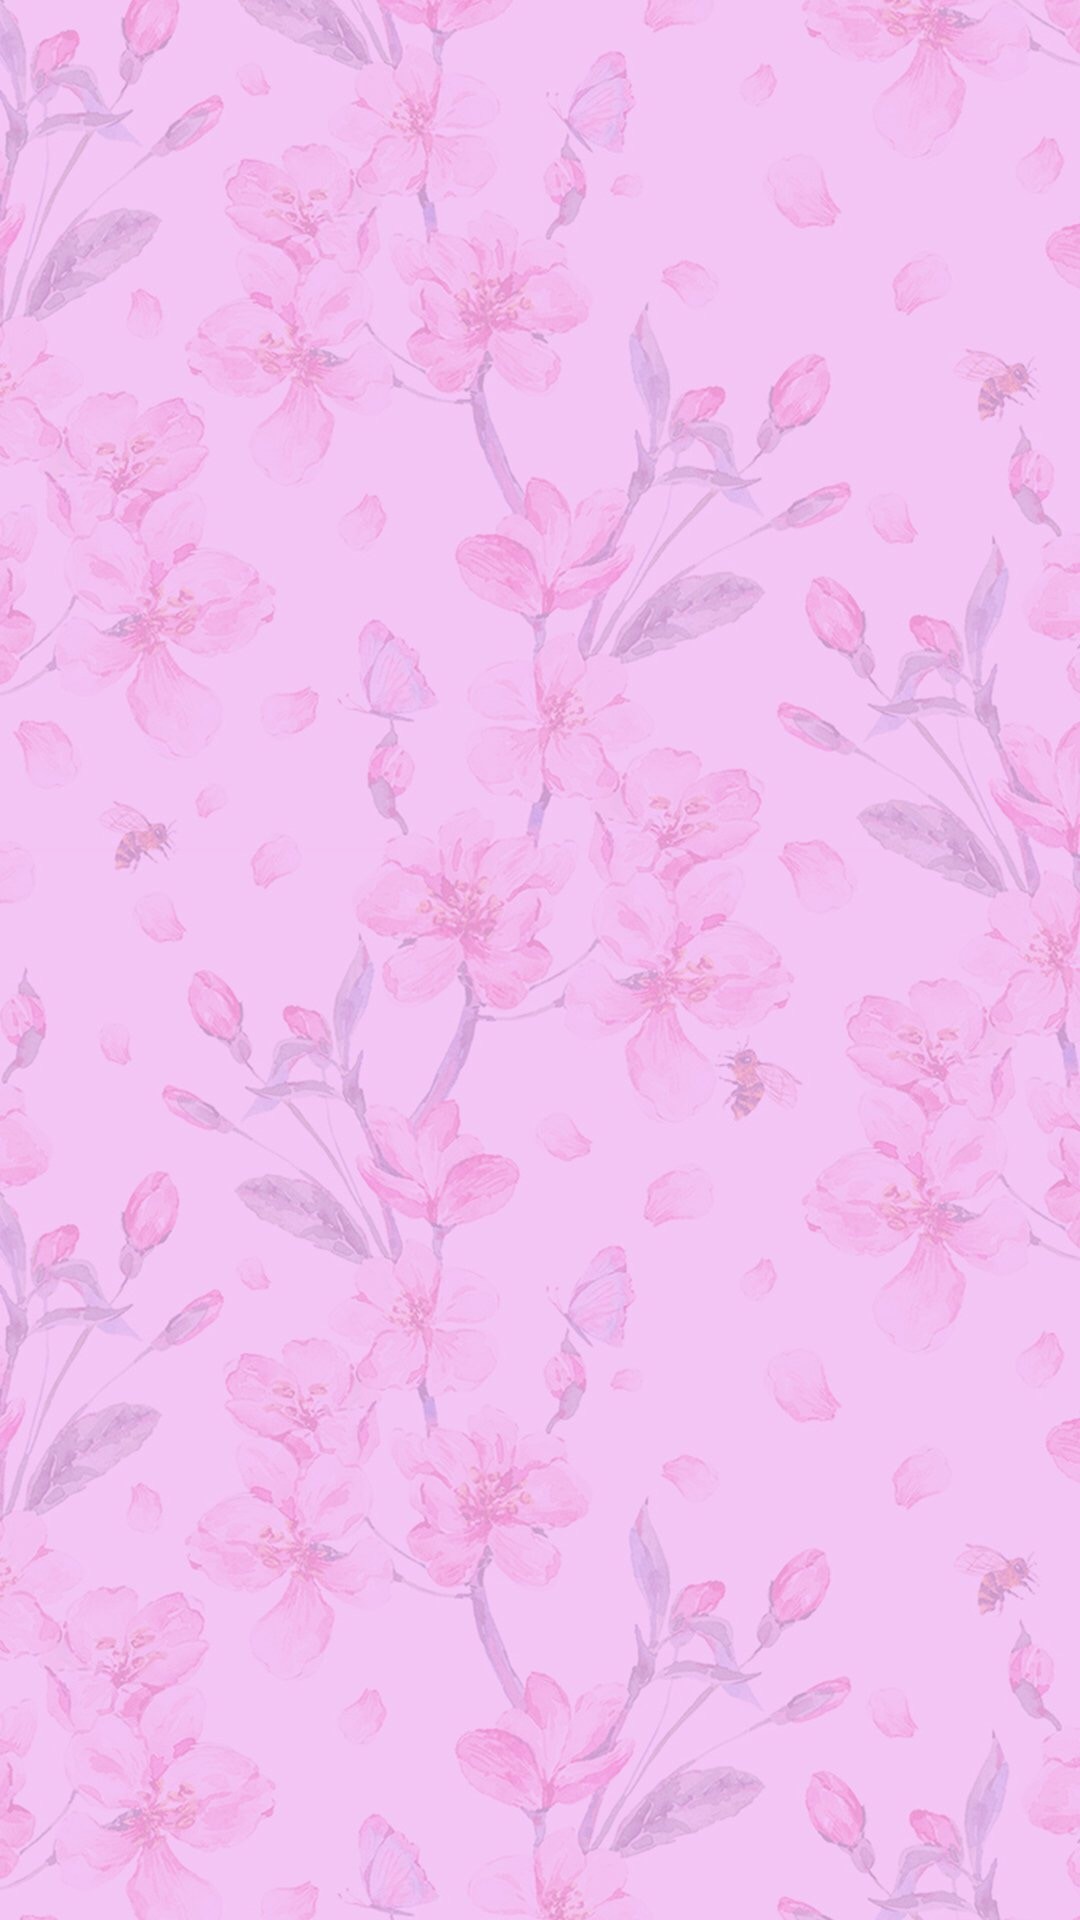 1080x1920 Pink Wallpaper, Smartphone, Pastel, Girly, Walls, Wall